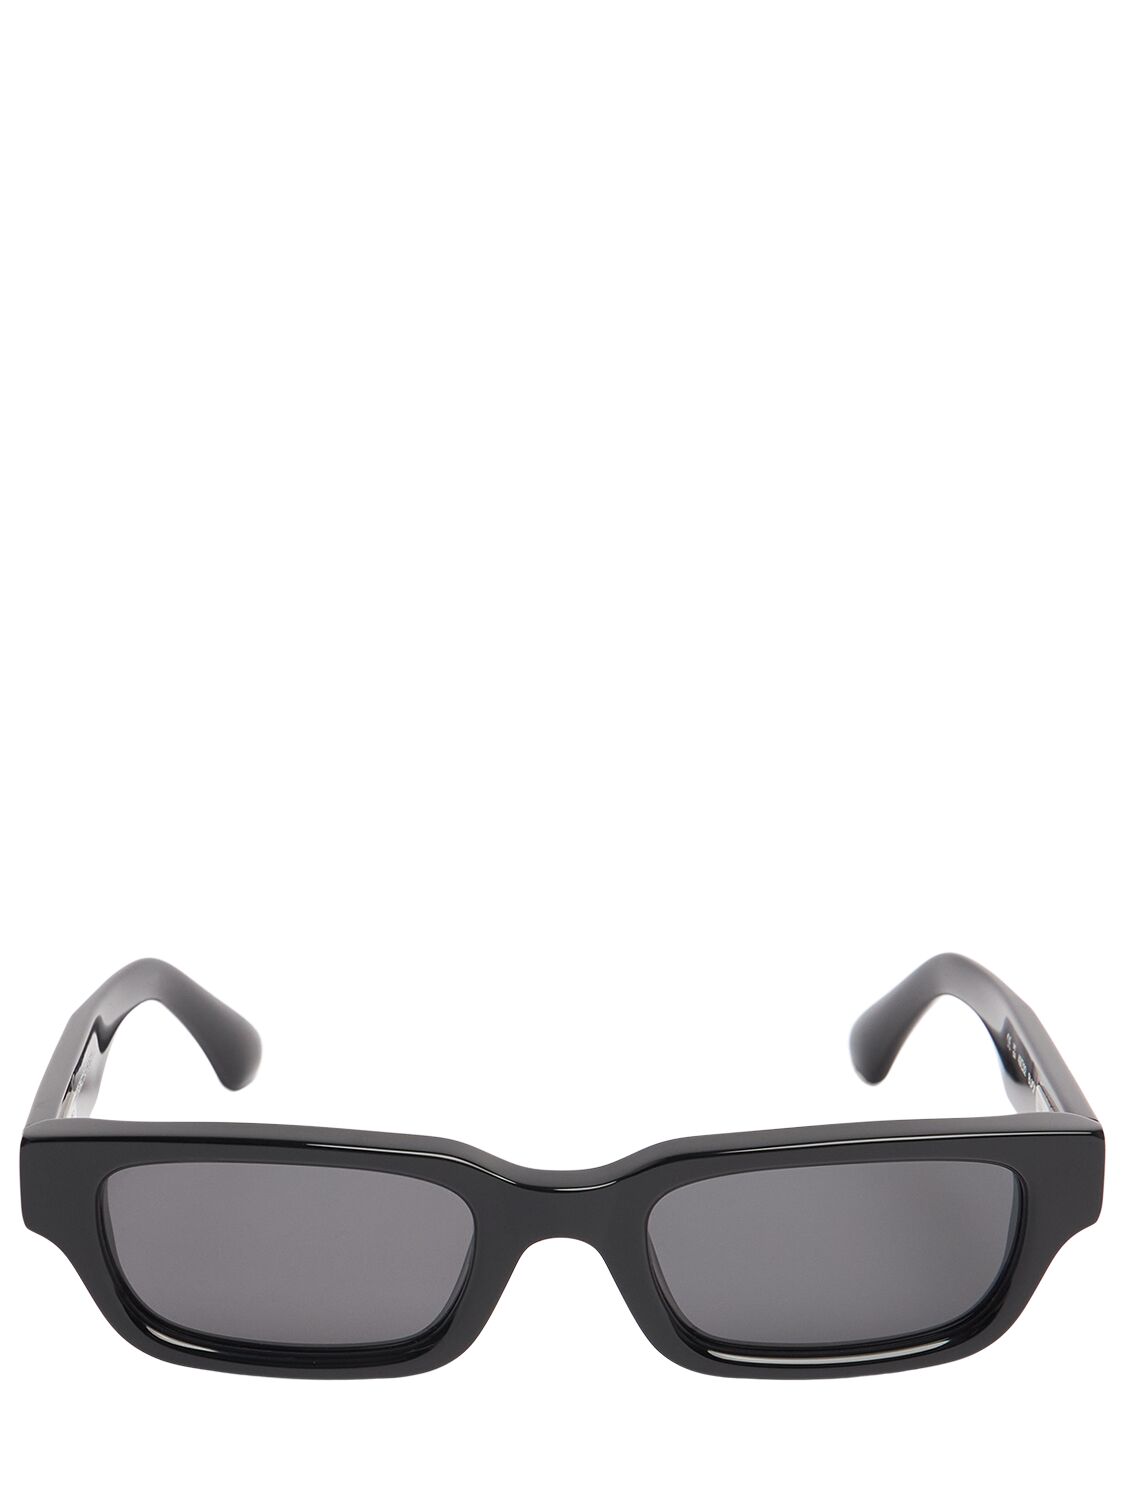 Chimi 10.3 Squared Acetate Sunglasses In Black